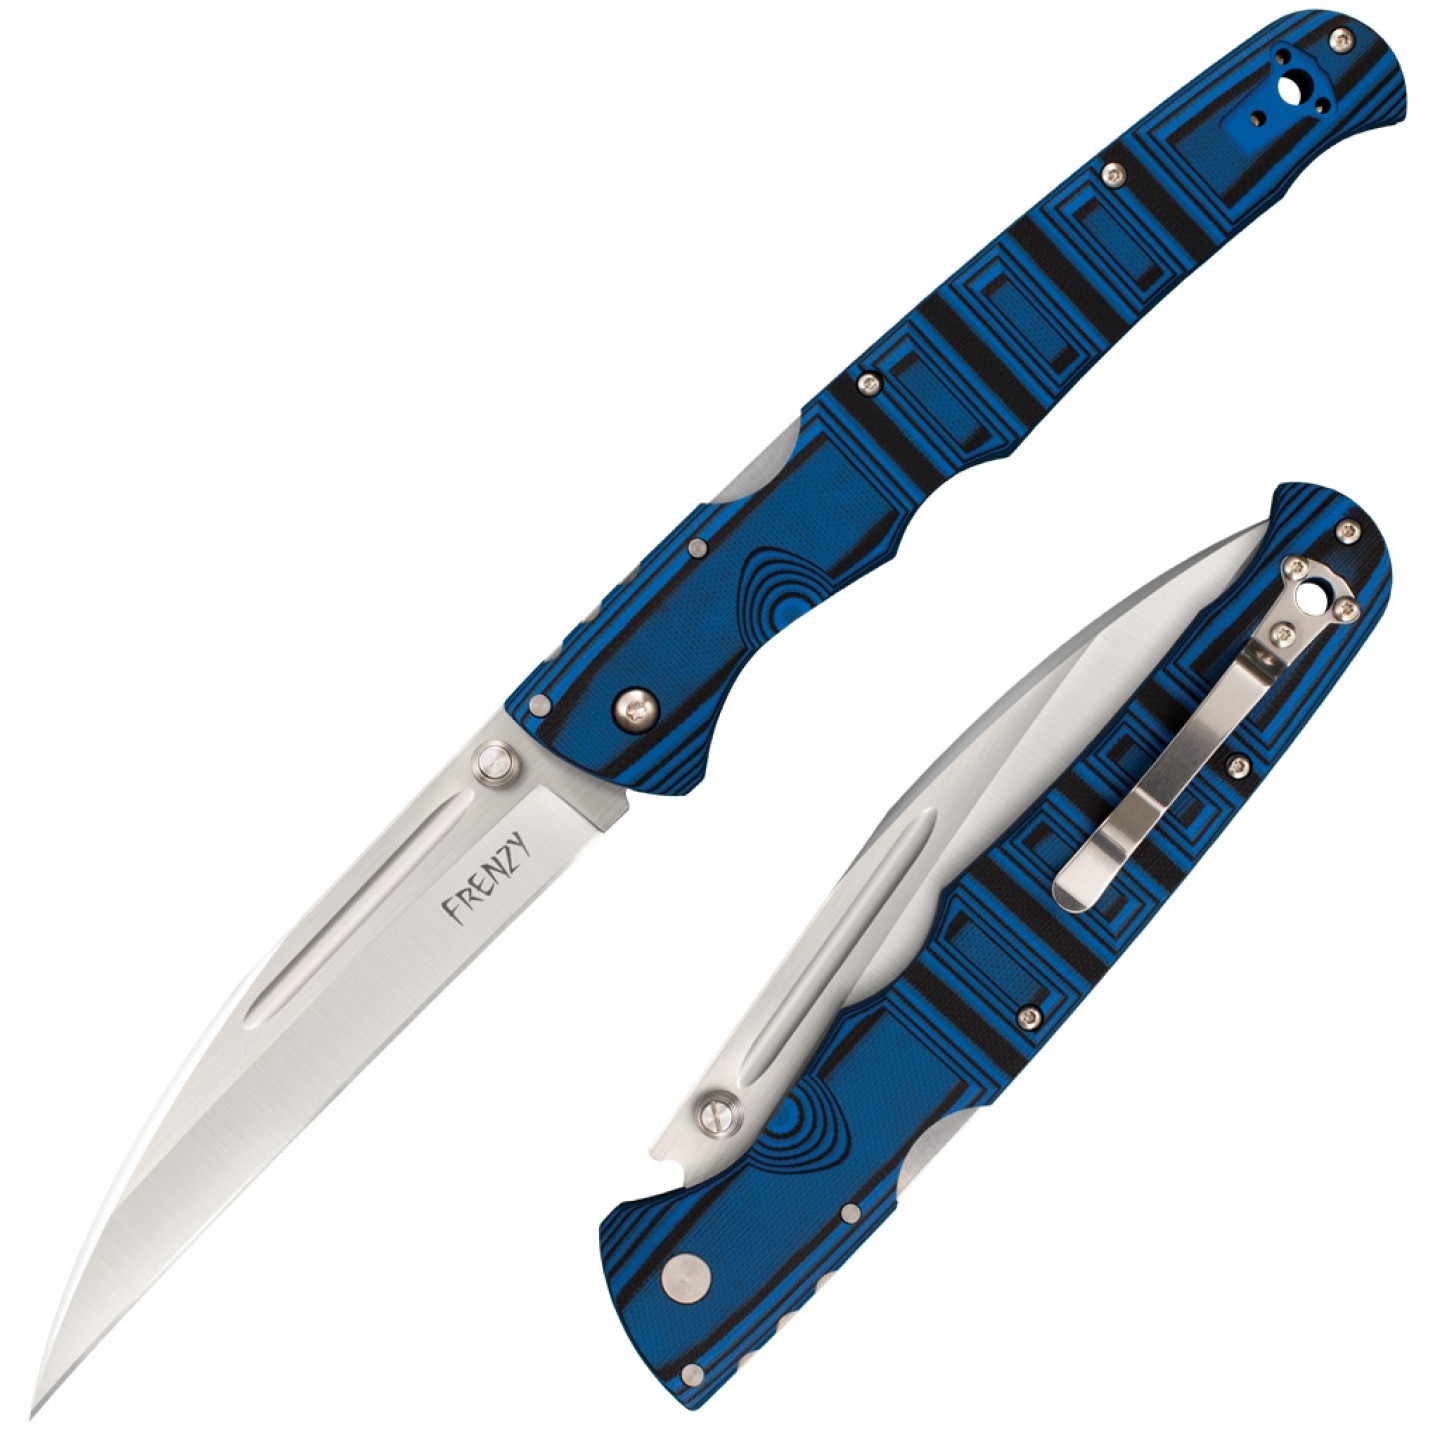 Складной нож Frenzy 2 (Blue/Black) - Cold Steel 62P2A, сталь CPM-S35VN, рукоять G10 - фото 1